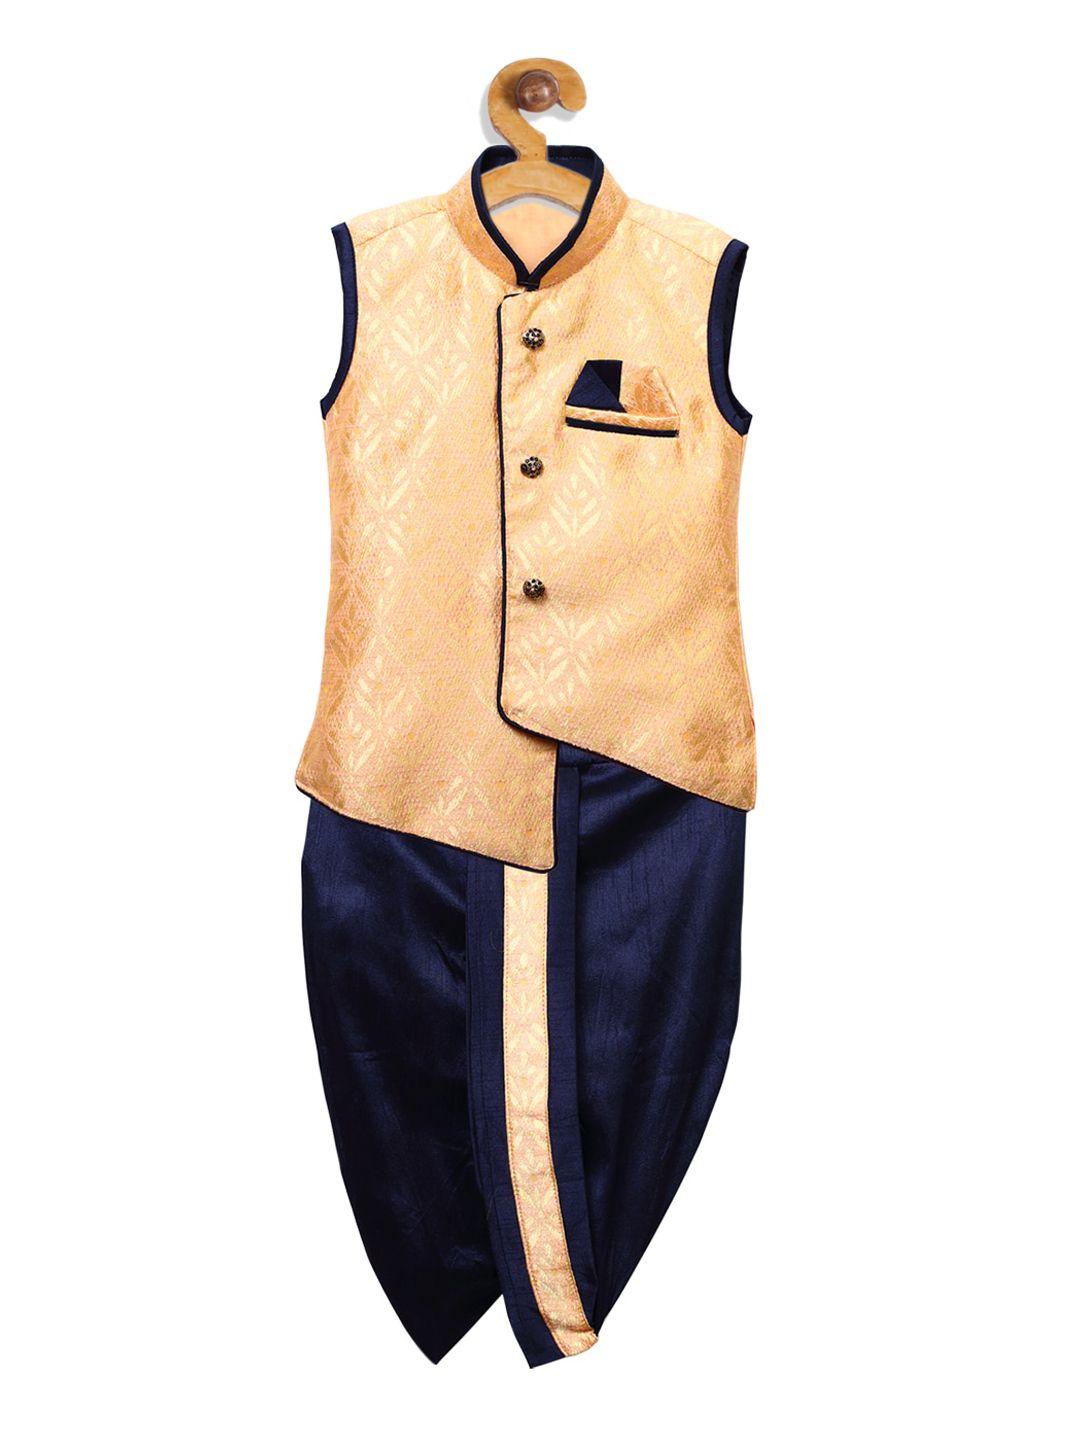 ridokidz boys rose gold & navy blue self design waistcoat with dhoti pants